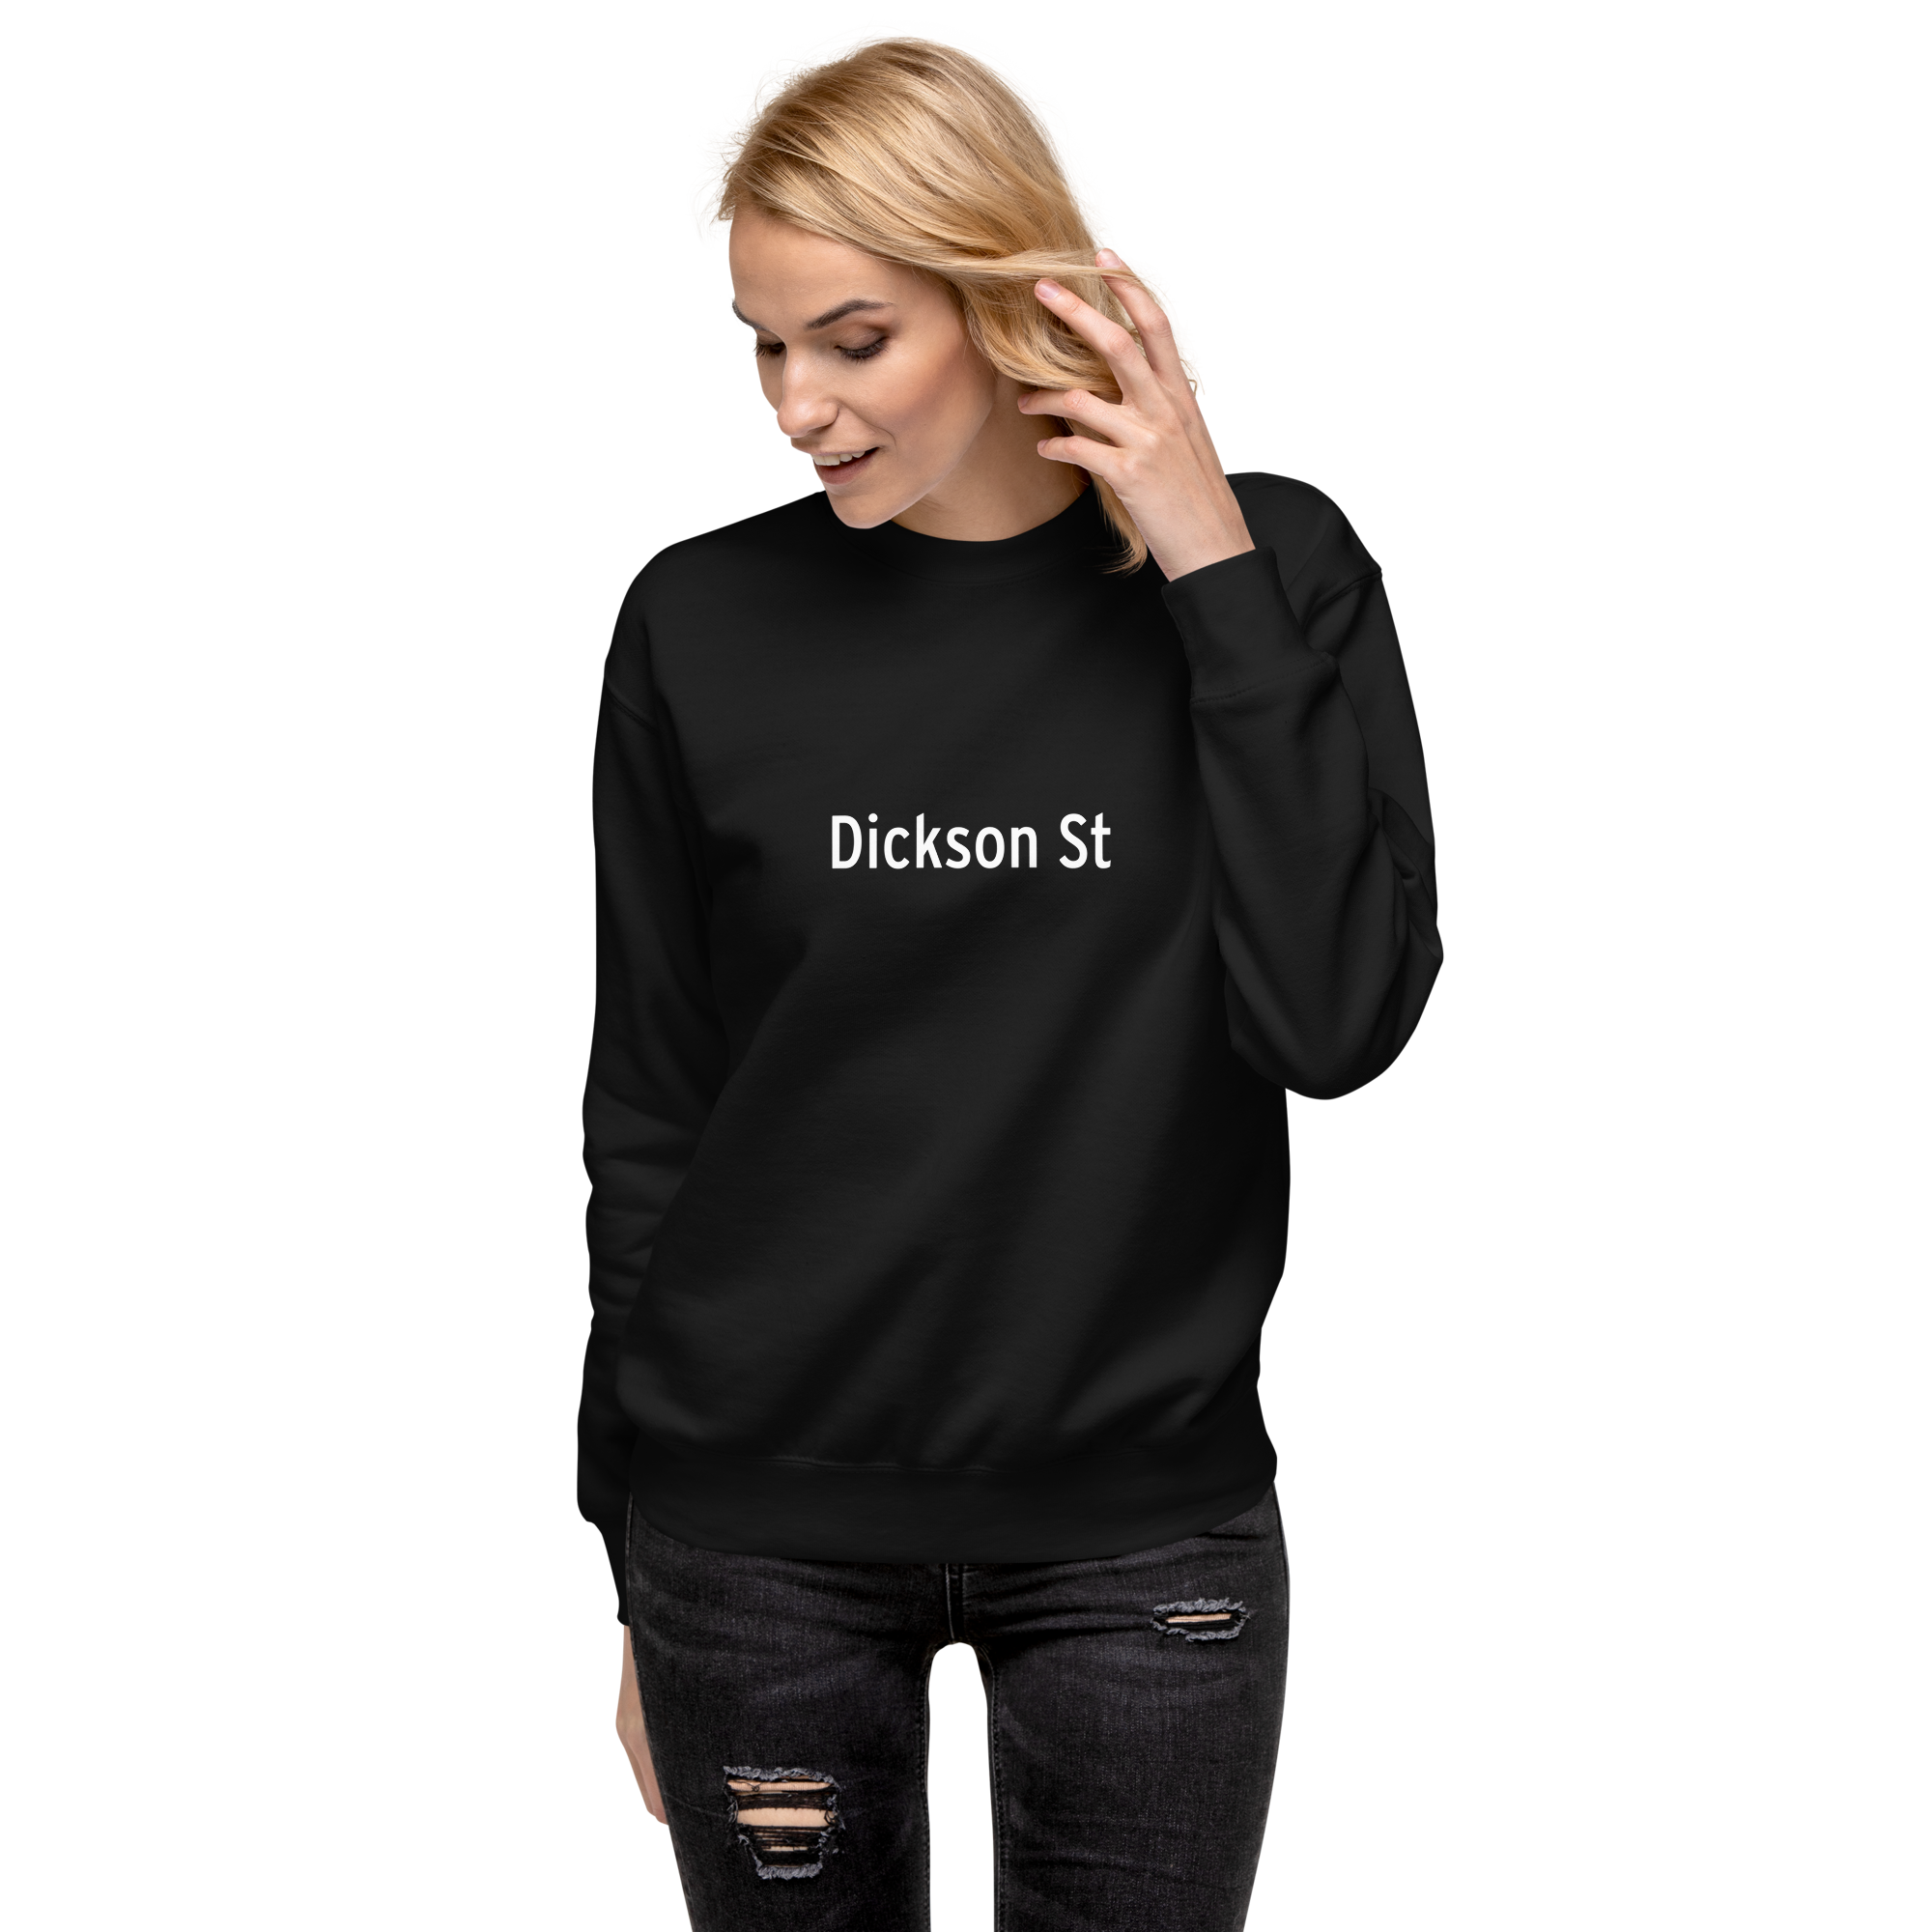 Dickson St Unisex Premium Sweatshirt